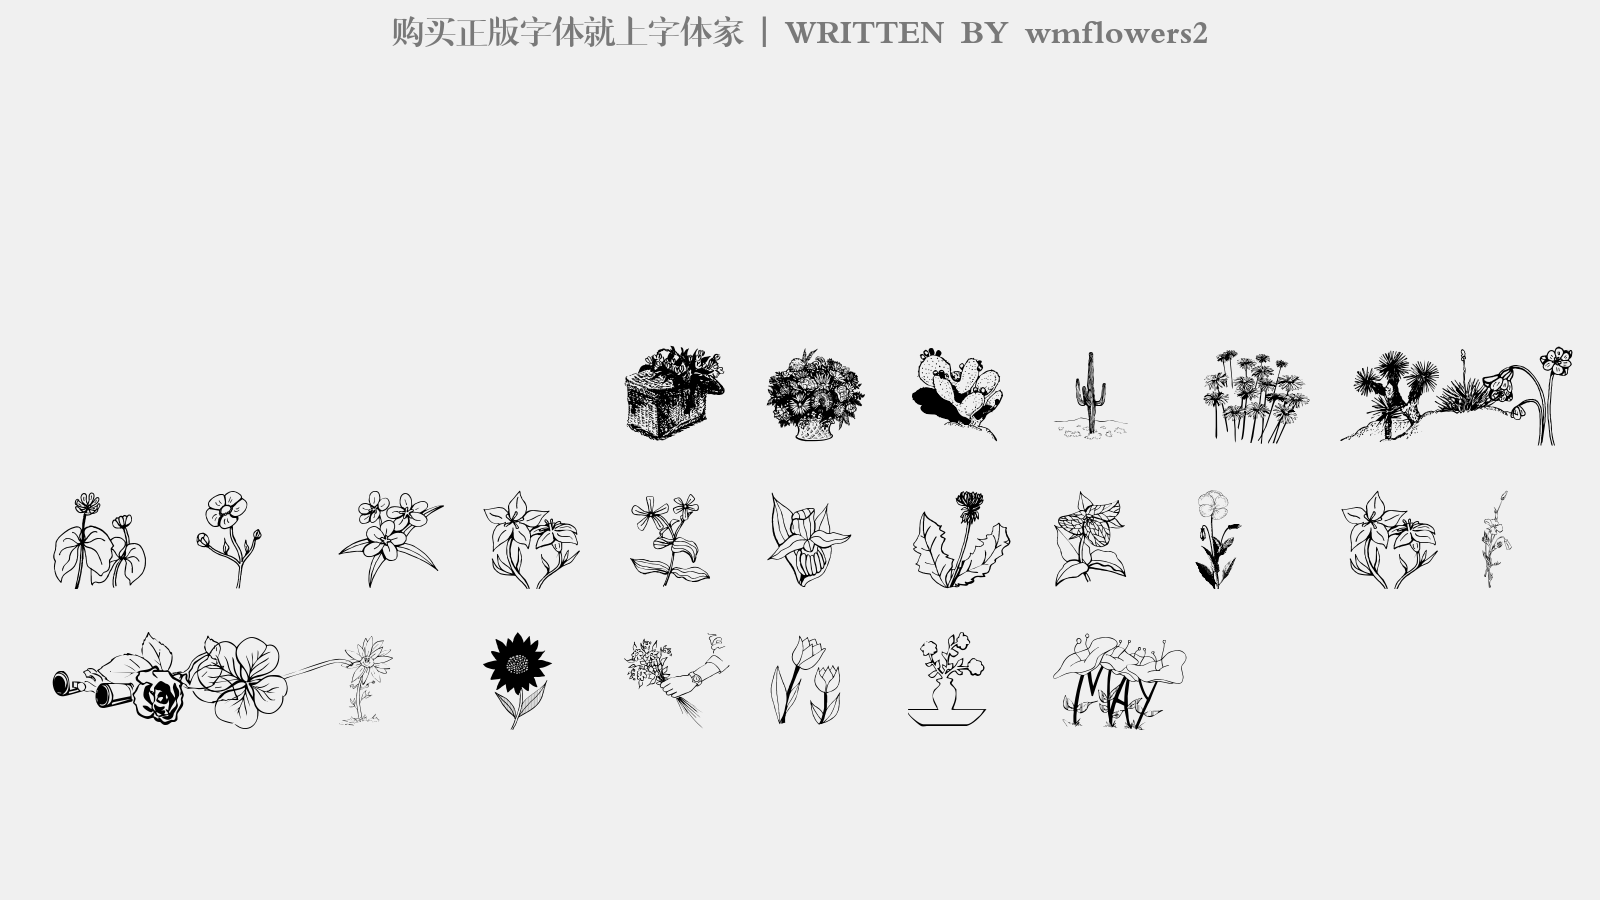 wmflowers2 - 大写字母/小写字母/数字